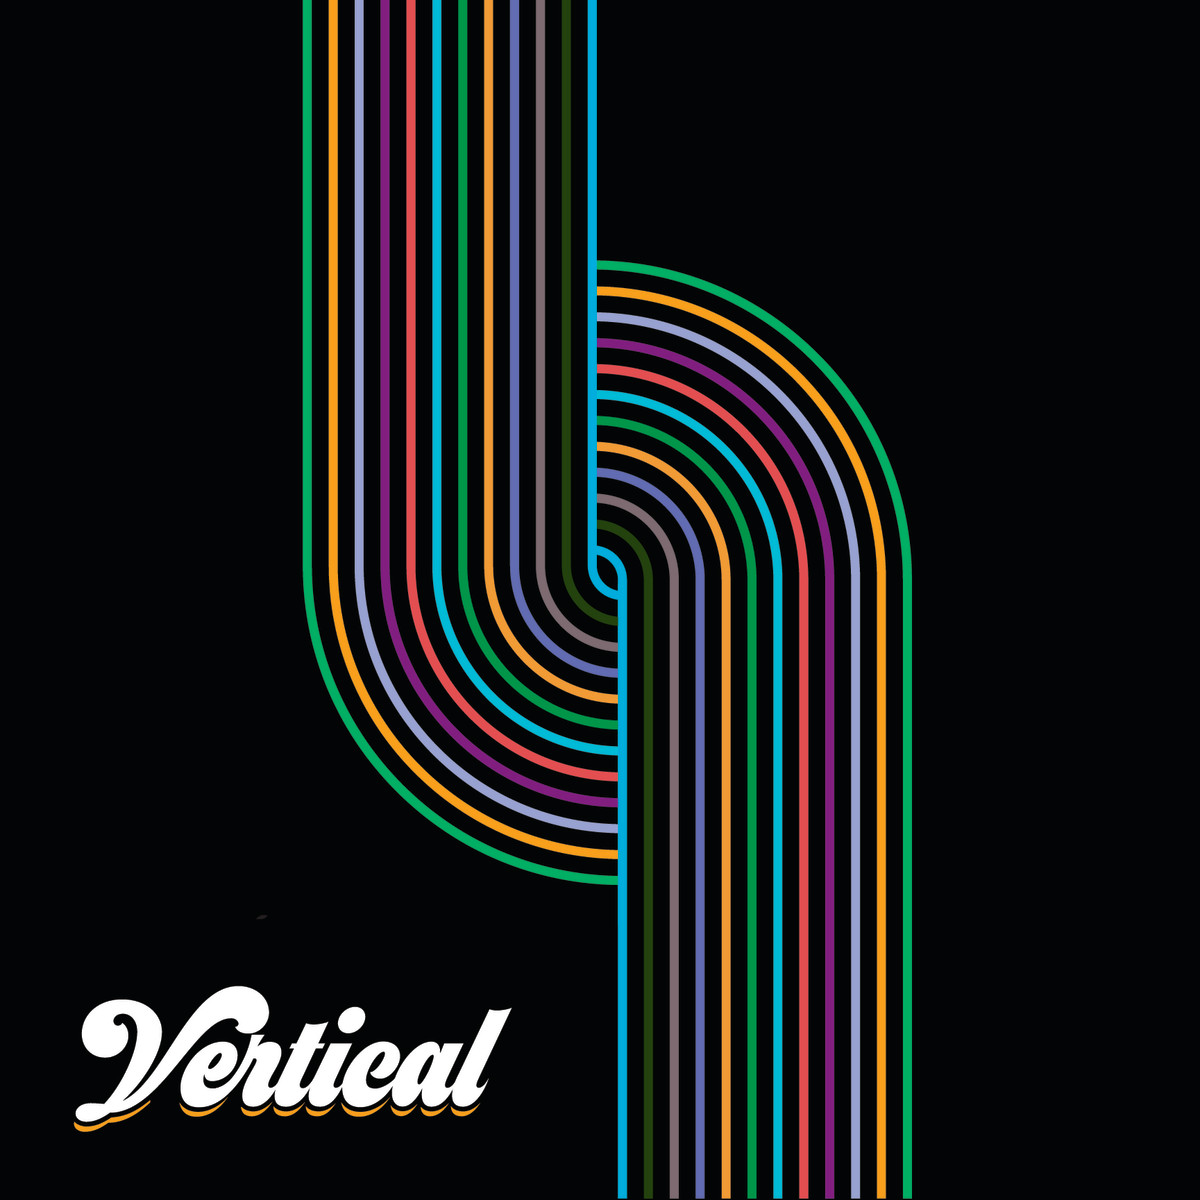 Vertical album cover. Credit: Kelly Walters @brightpolkadot